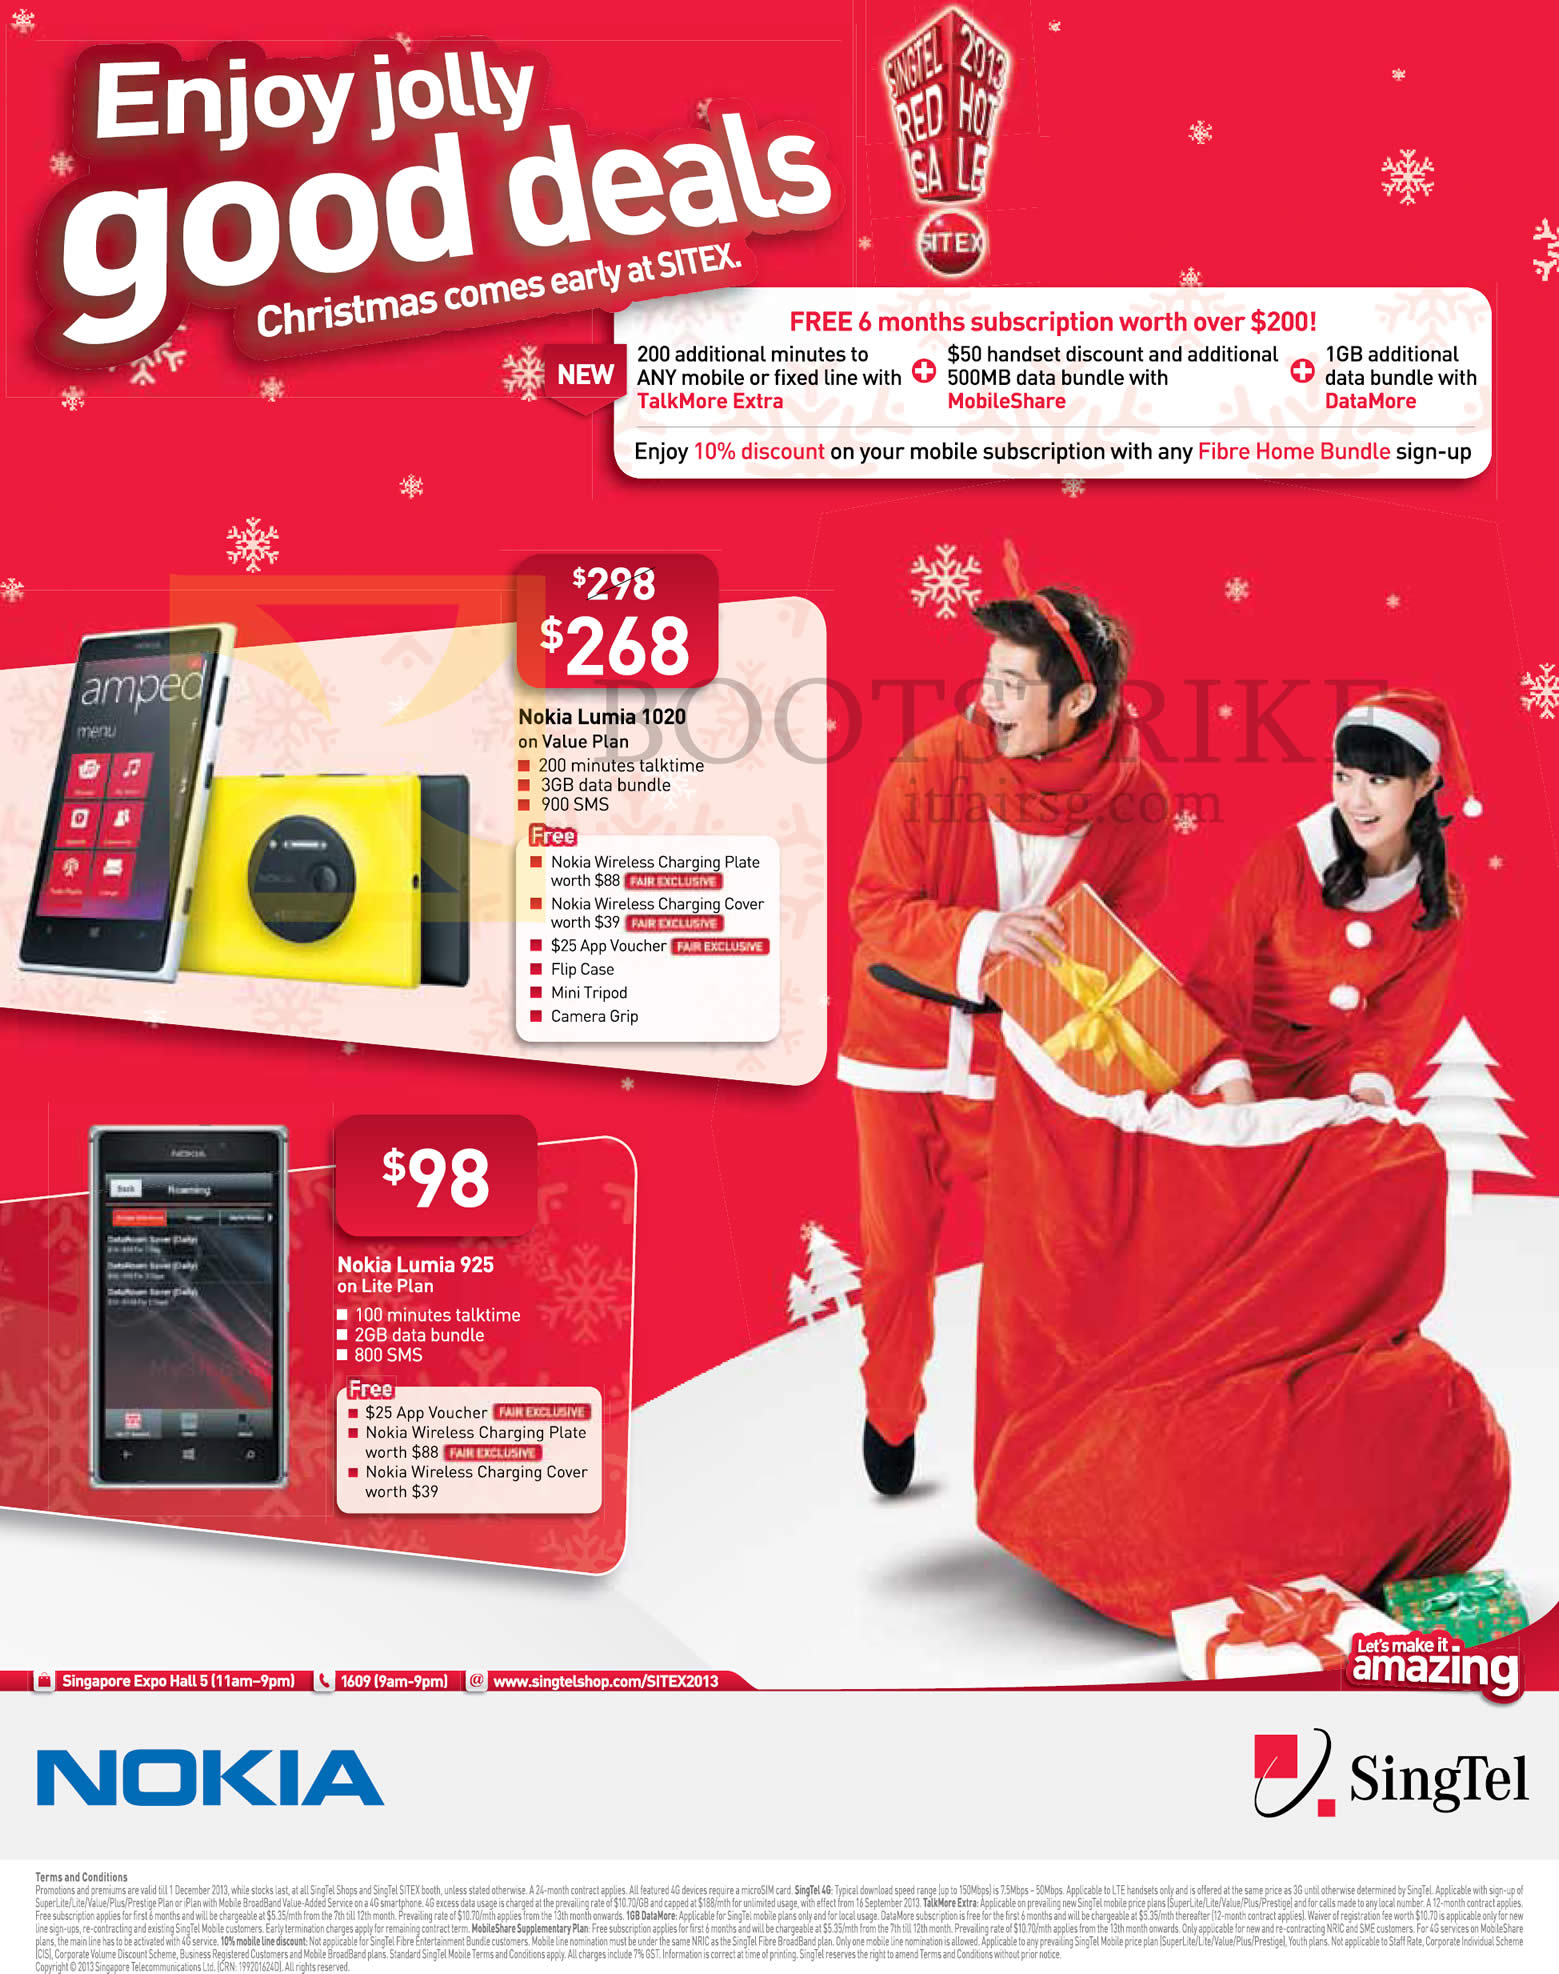 SITEX 2013 price list image brochure of Singtel Mobile Nokia Lumia 1020, Lumia 925, Free 6 Months